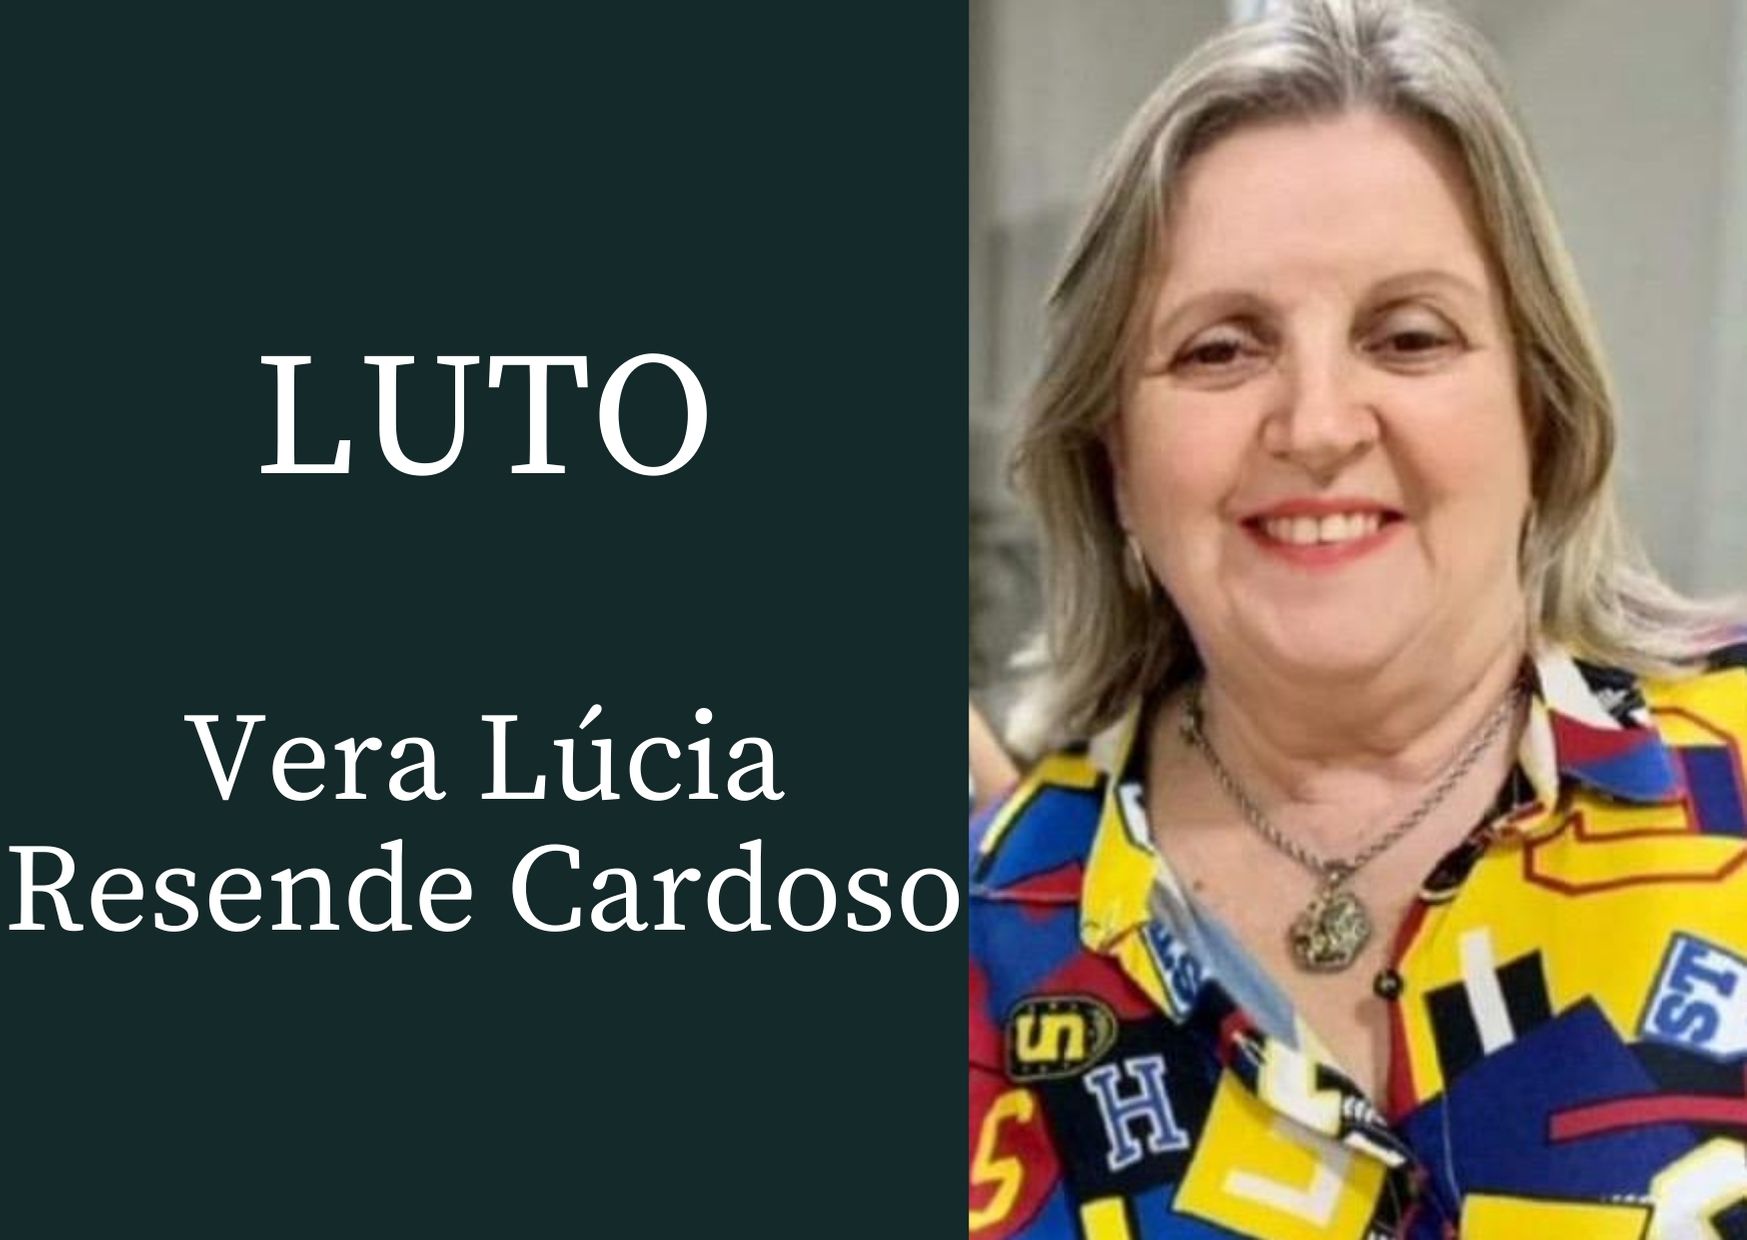 LUTO - Diretora Vera Lúcia Resende Cardoso